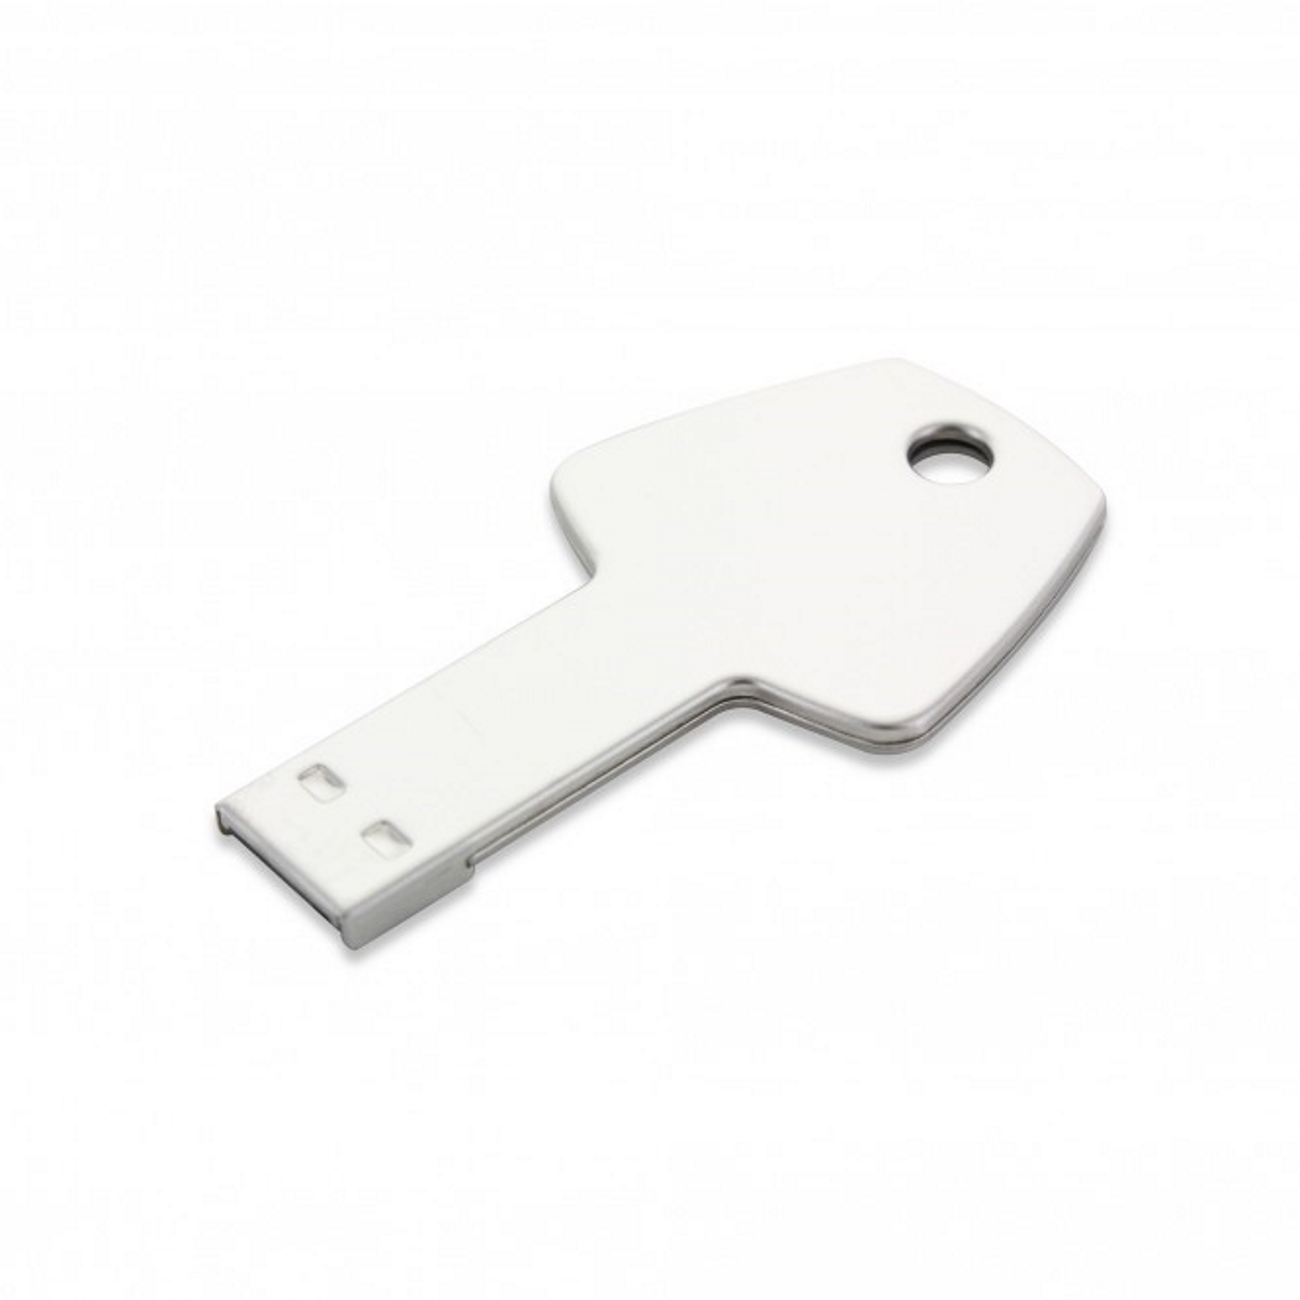 (Silber, USB GERMANY GB) ®Schlüssel 128 USB-Stick Key